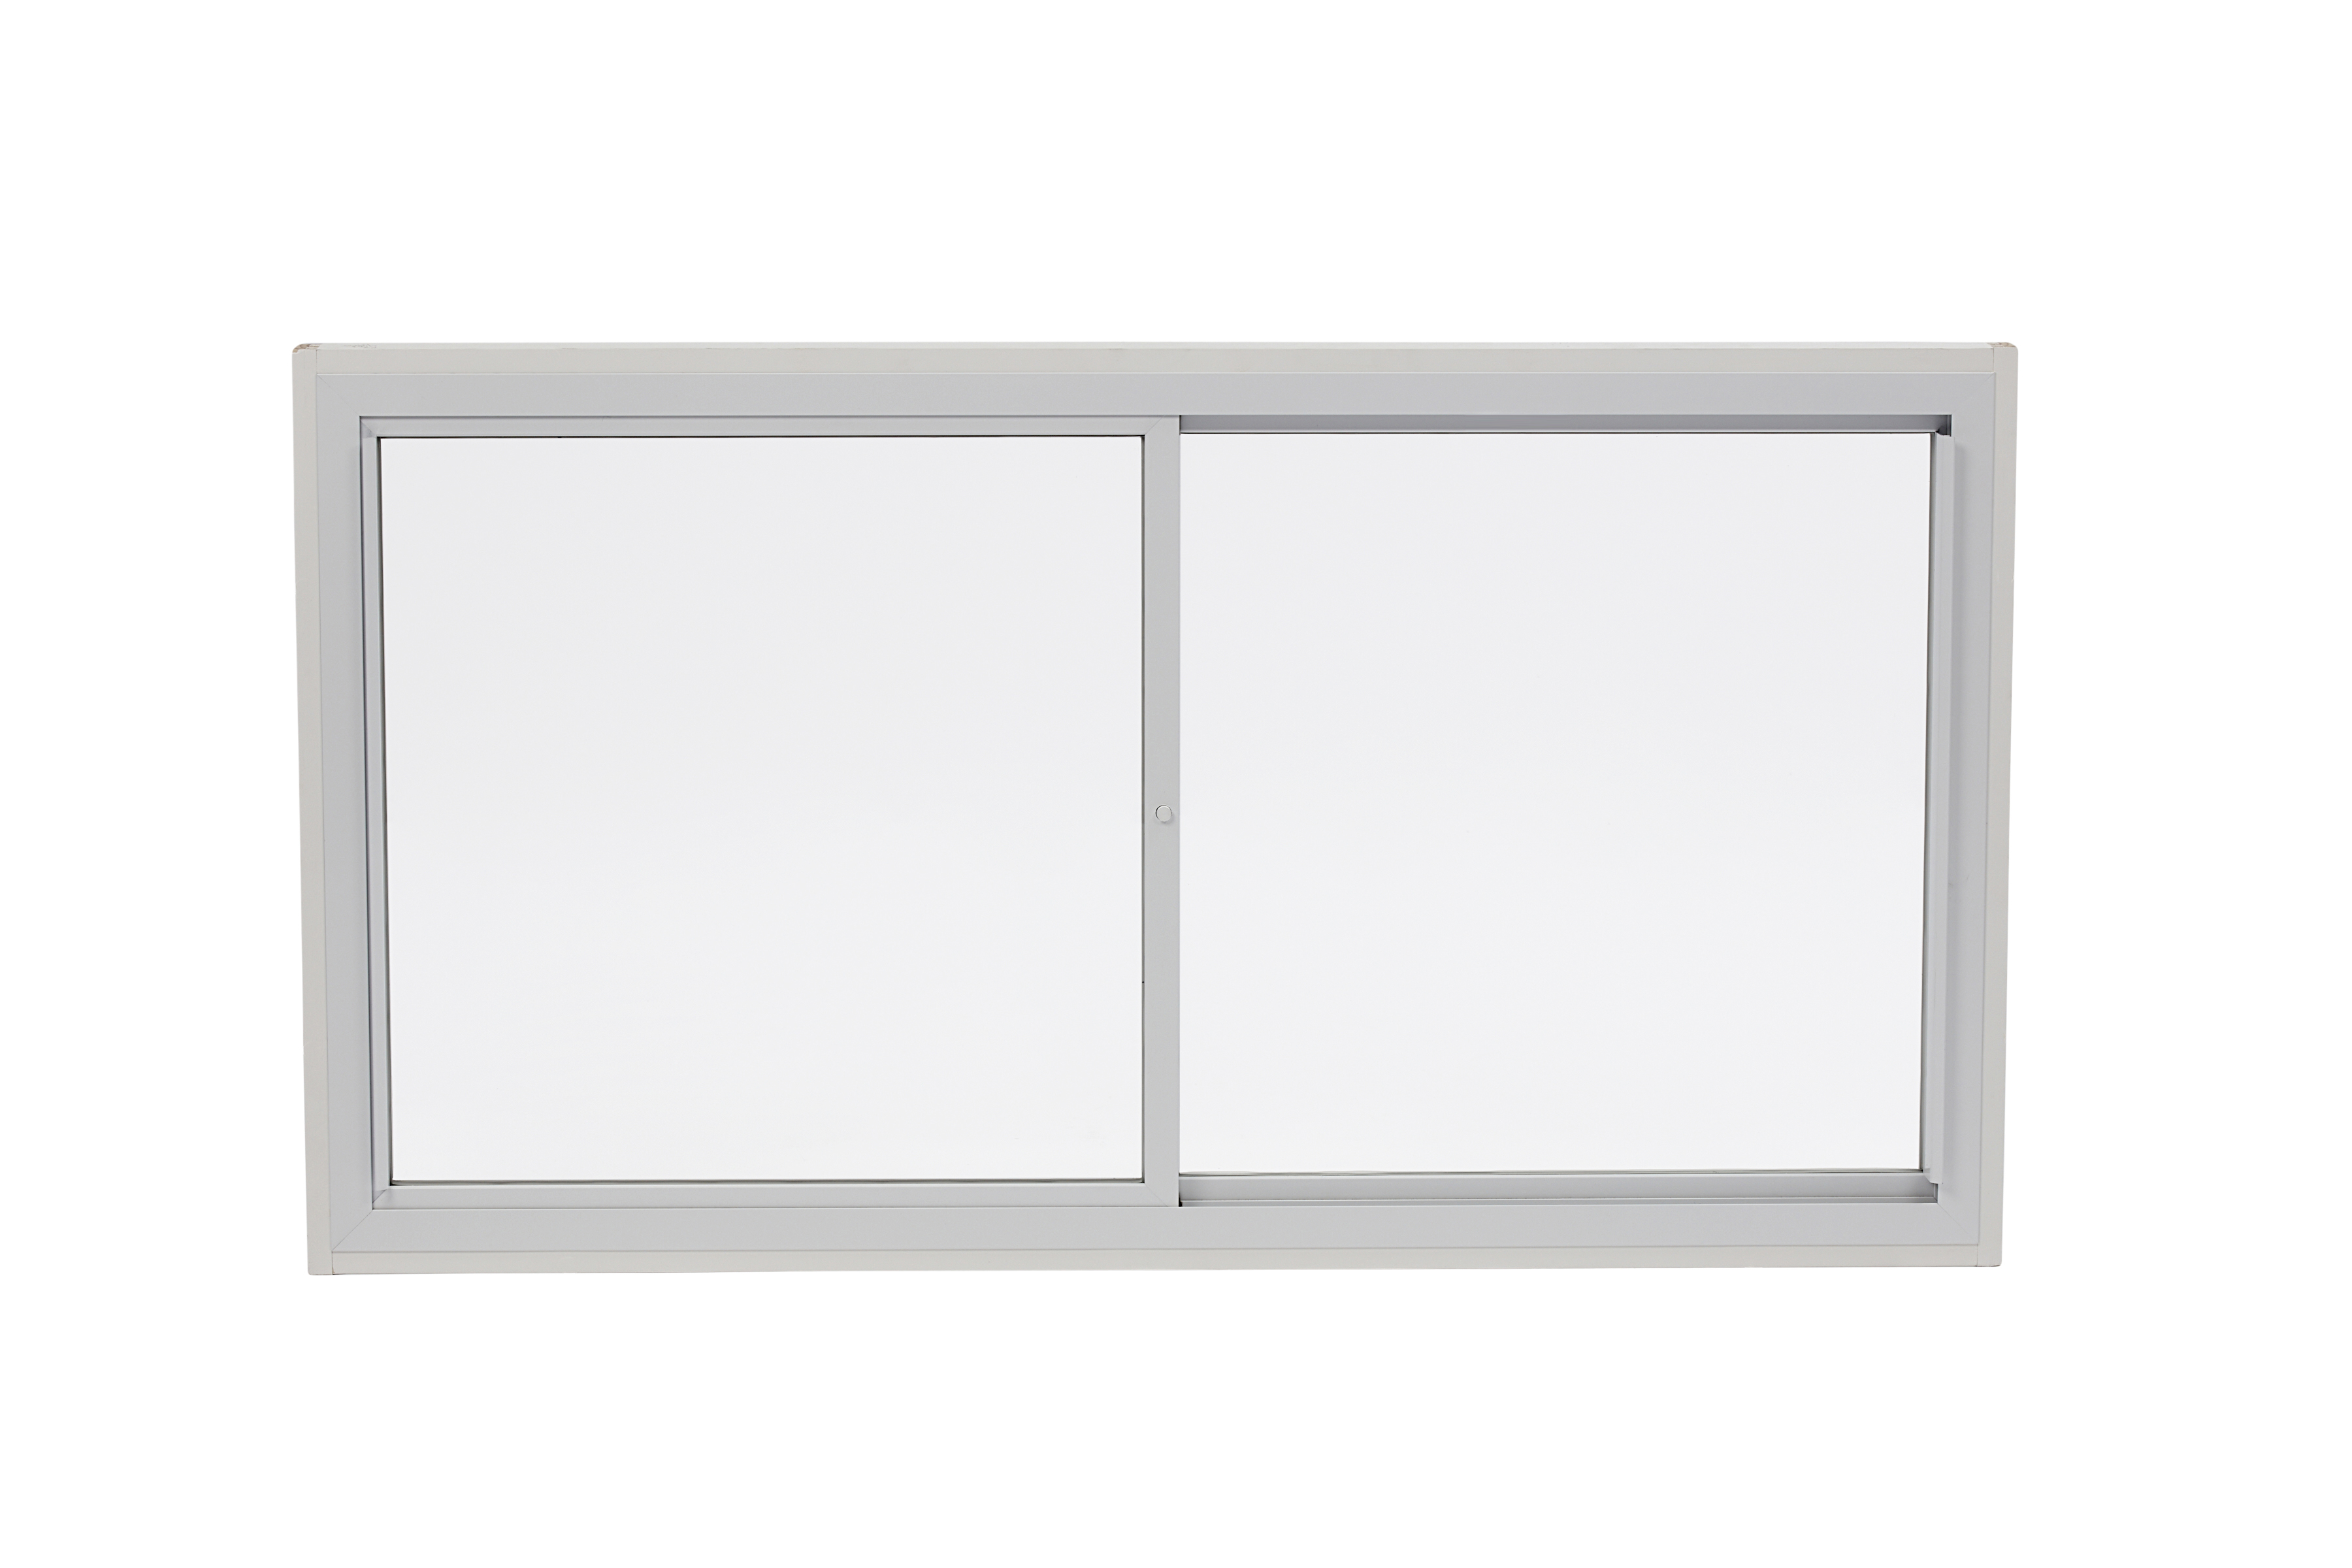 2 panel horizontal slider secondary glazing unit